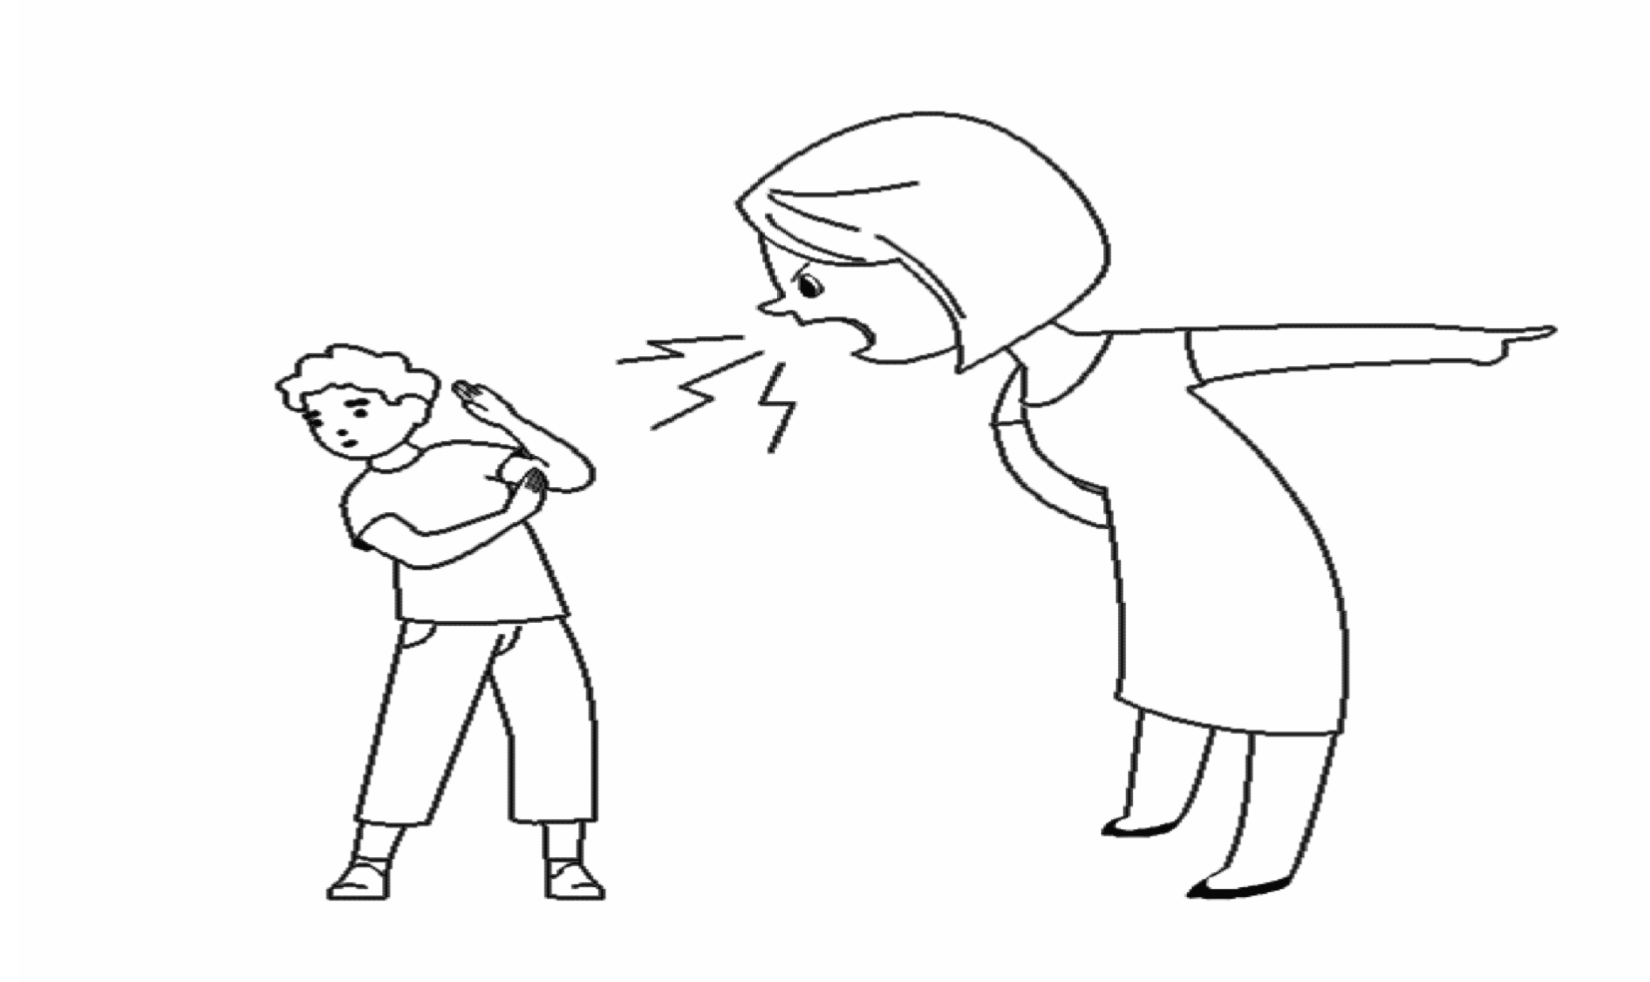 Cartoon, mother scolds child